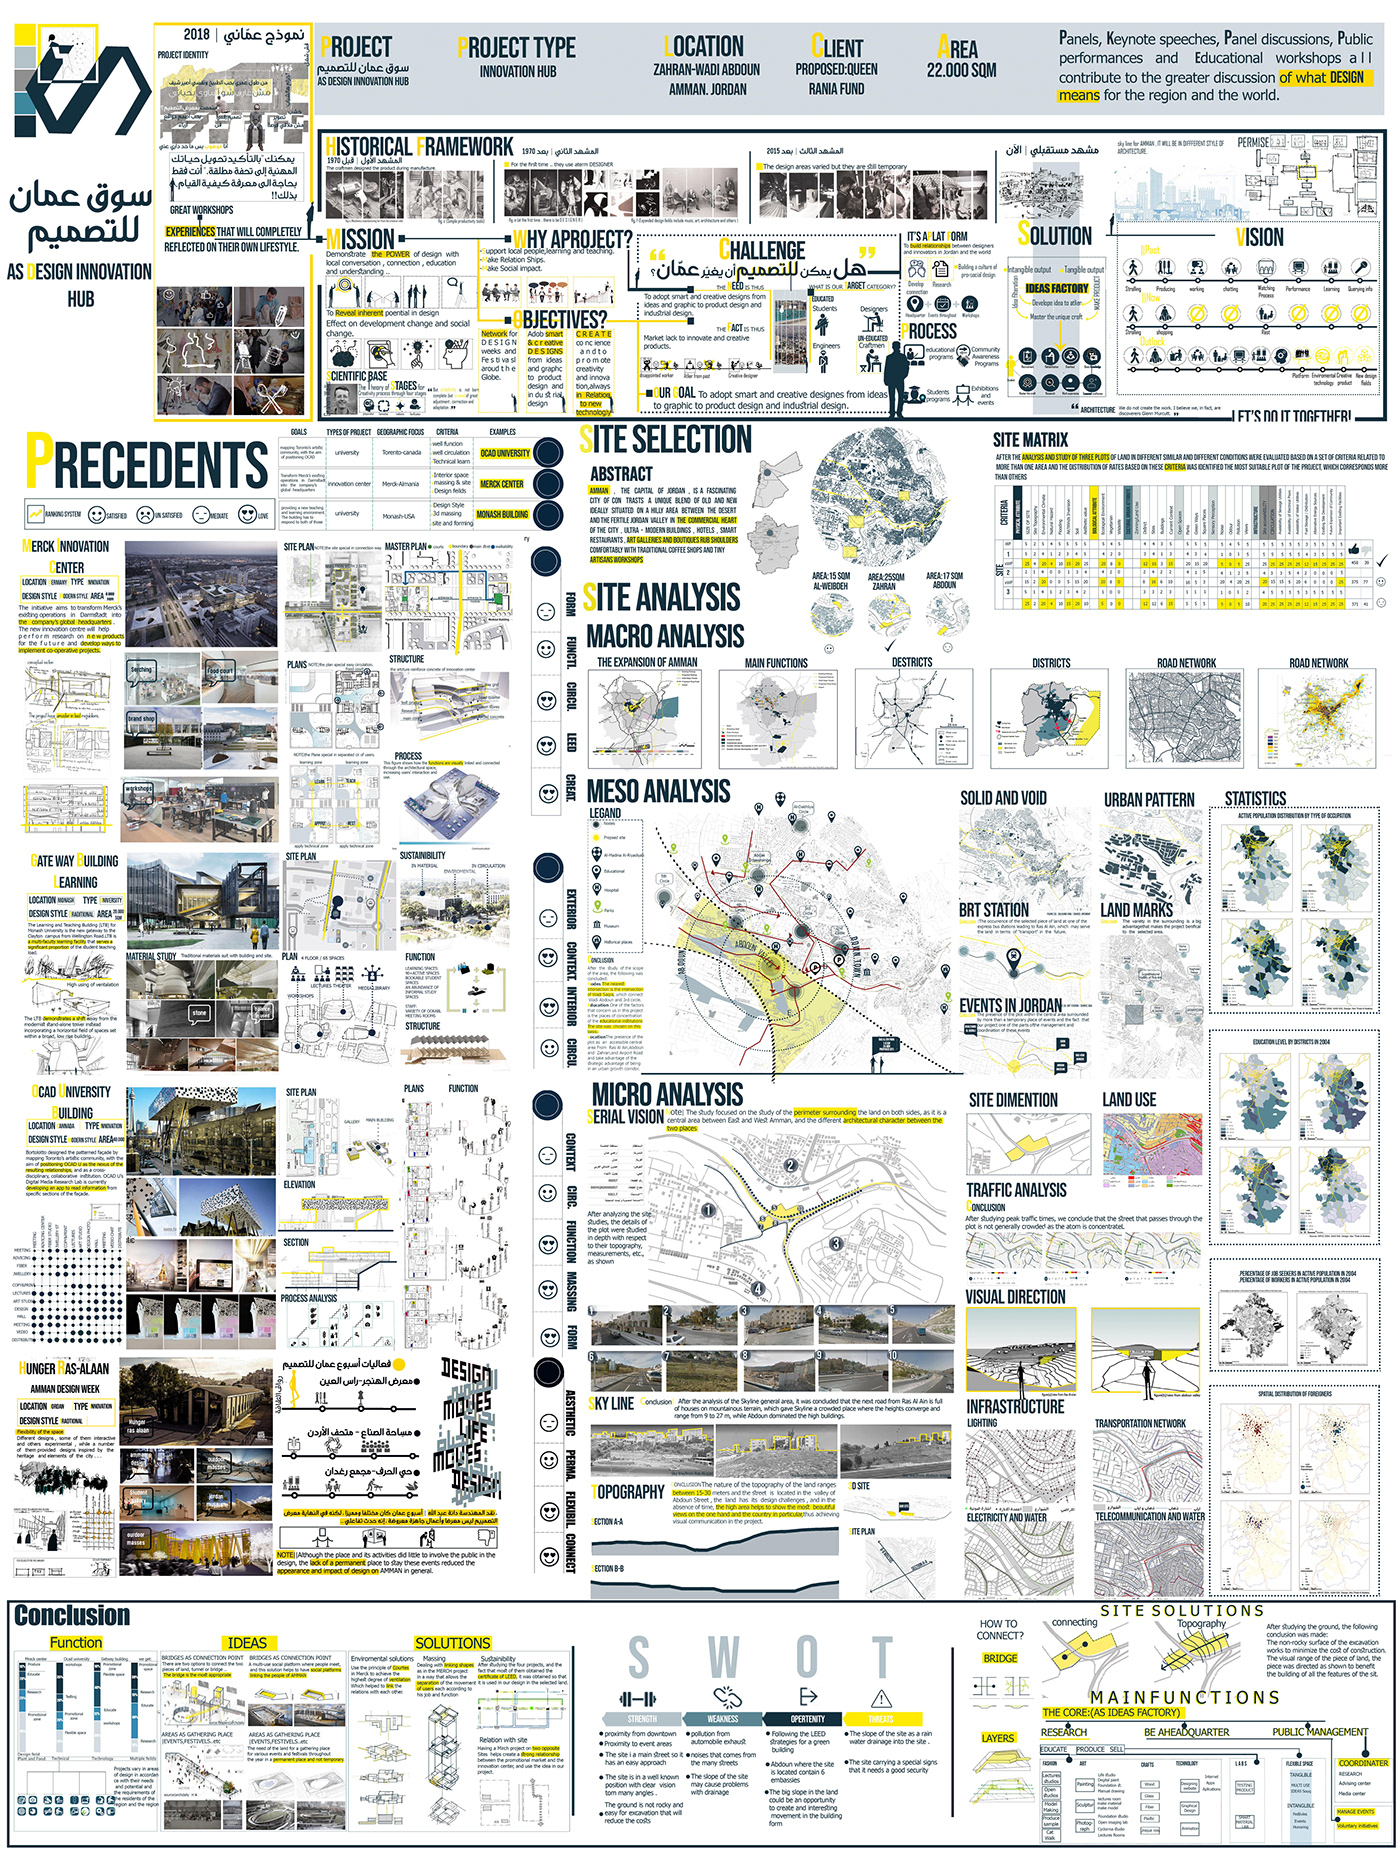 Analysis Report architecture siteanalysis